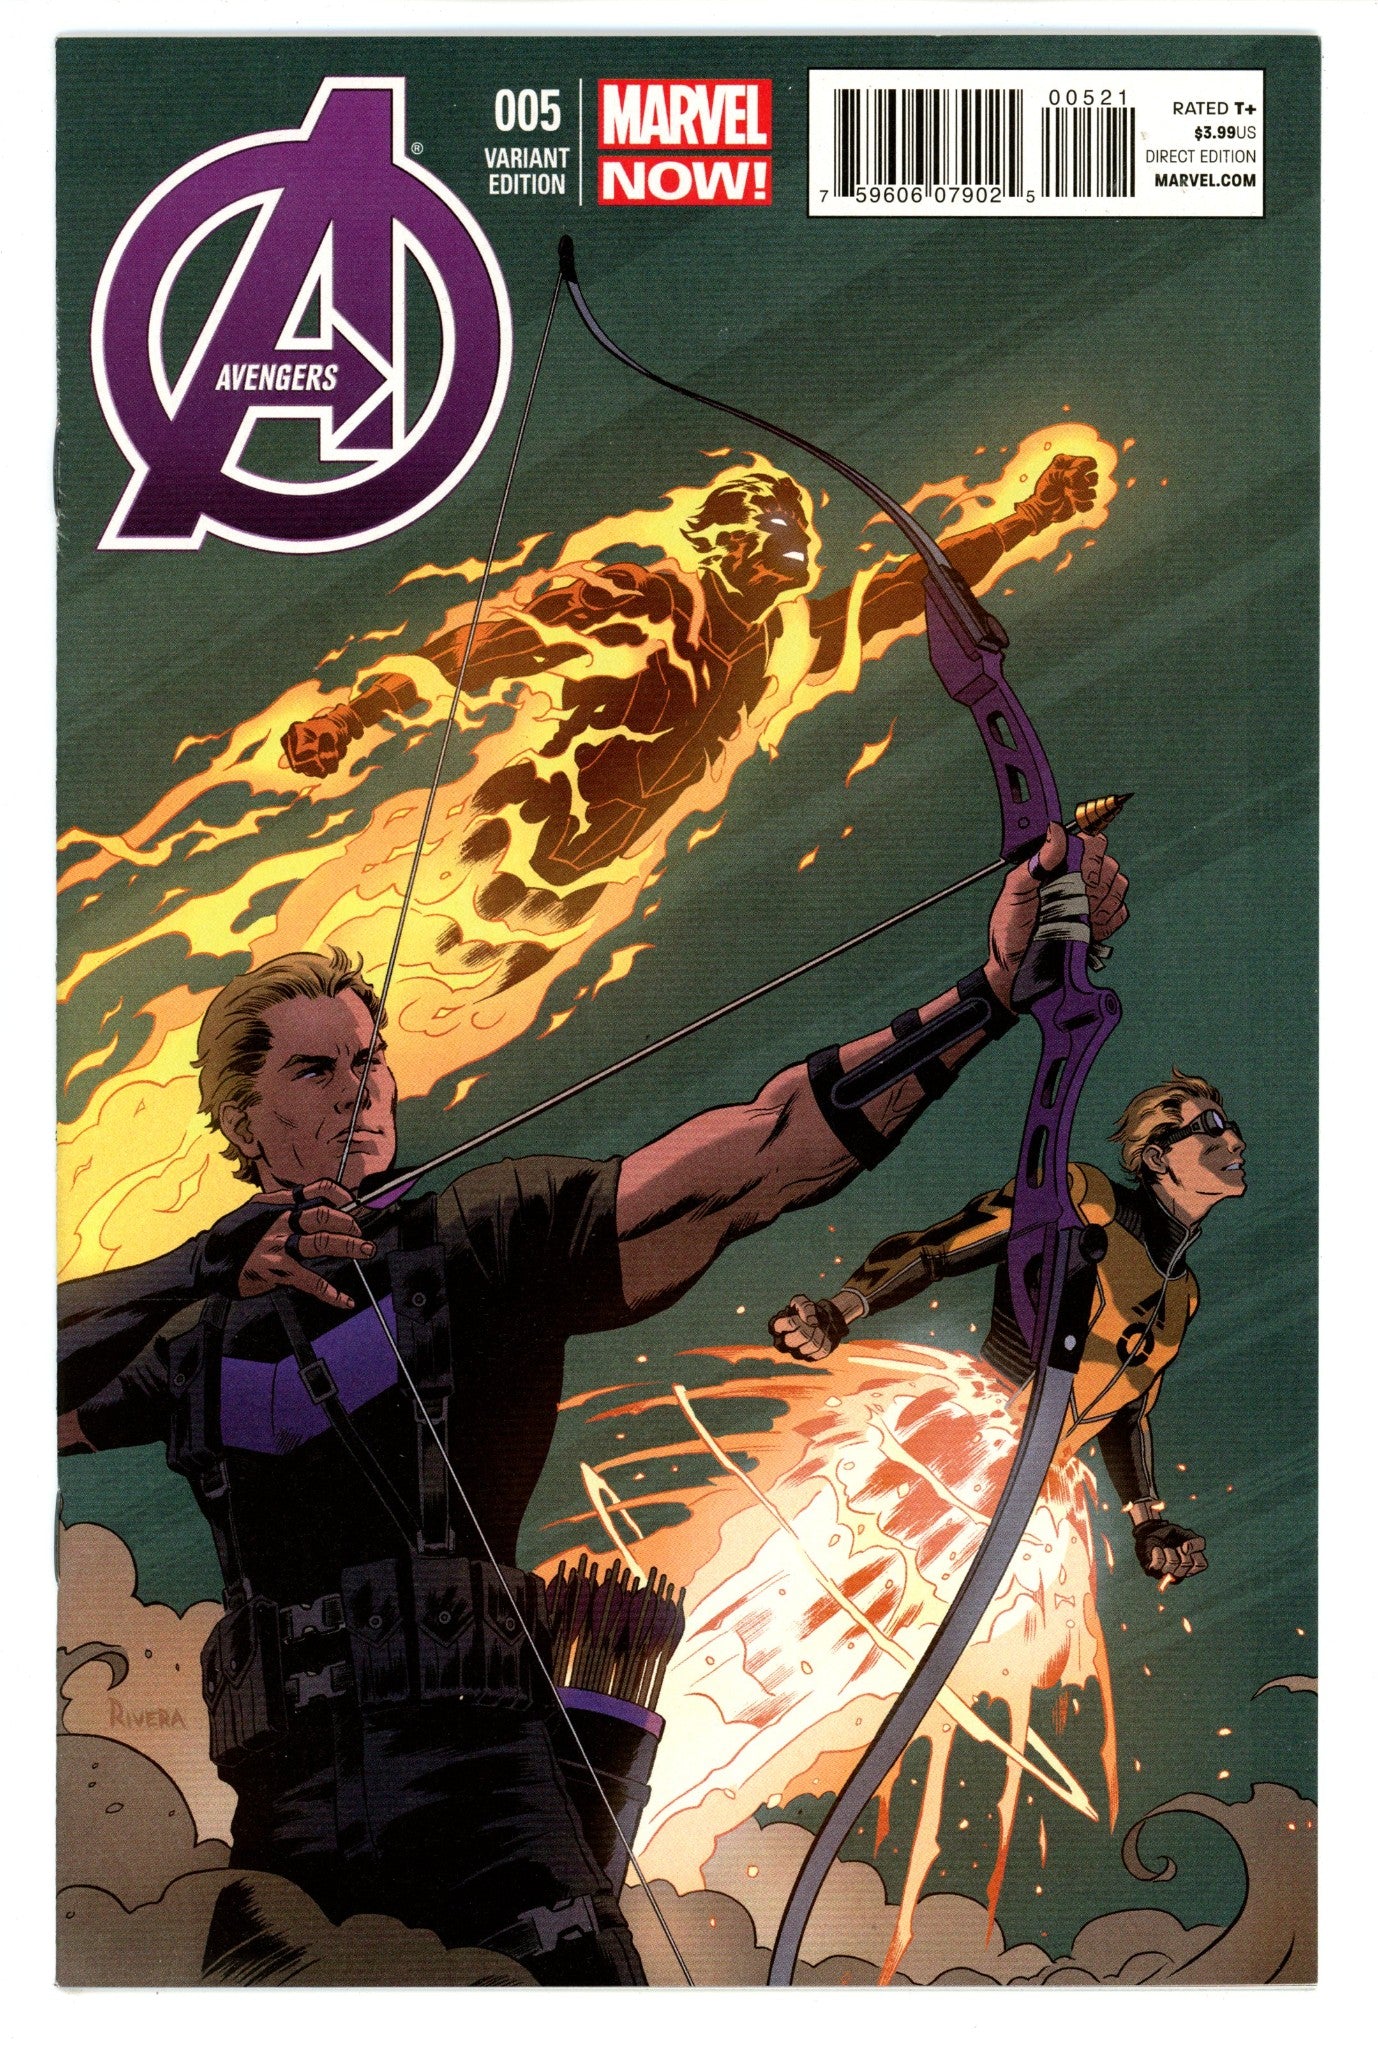 Avengers Vol 5 5 VF/NM (9.0) (2013) Rivera Incentive Variant 